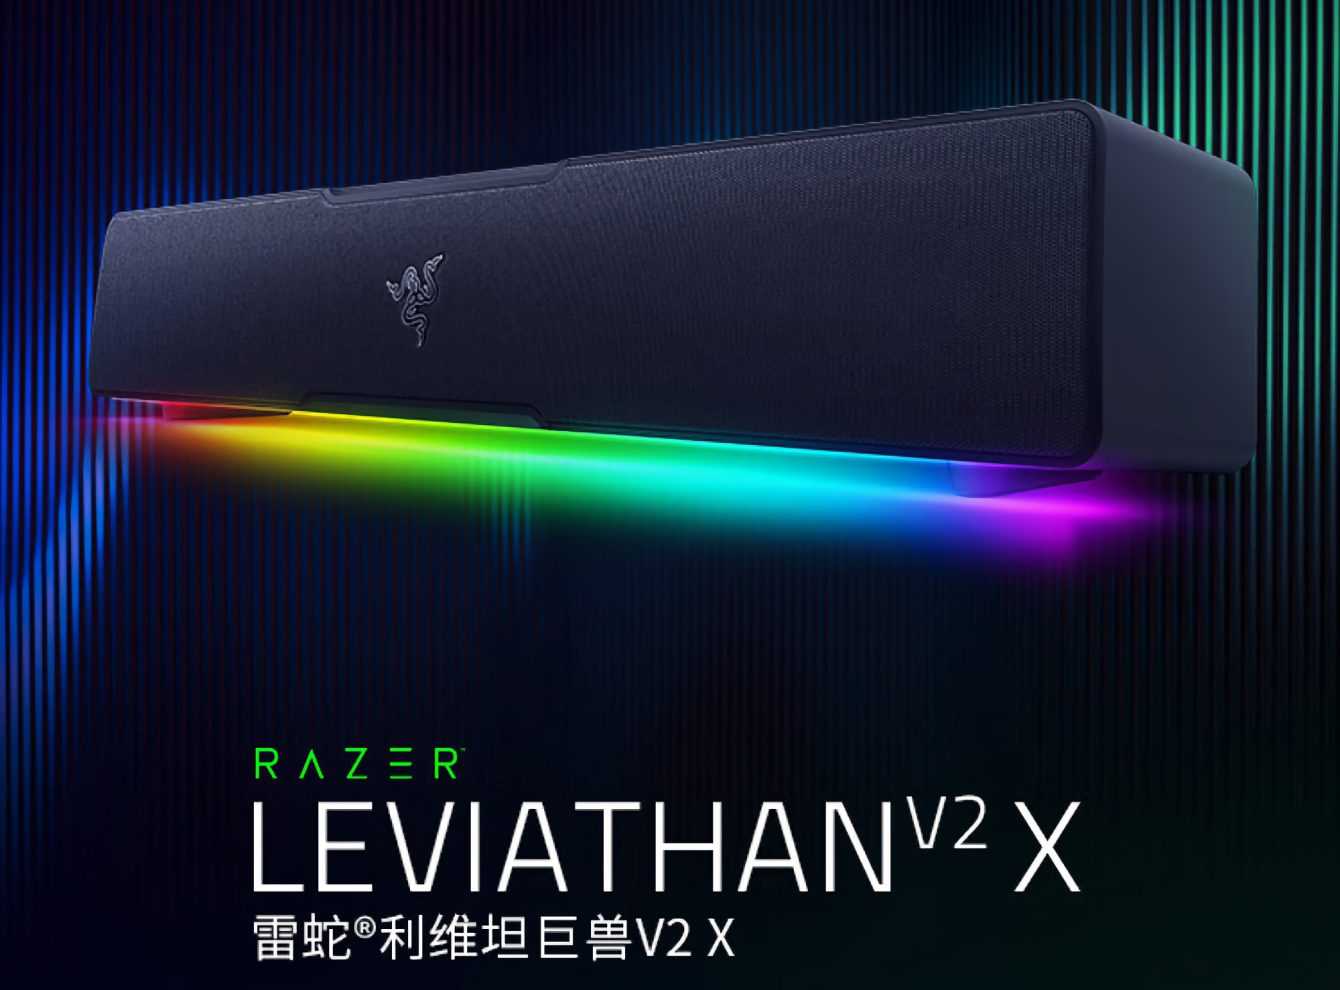 RAZER: here is the new LEVIATHAN V2 X soundbar